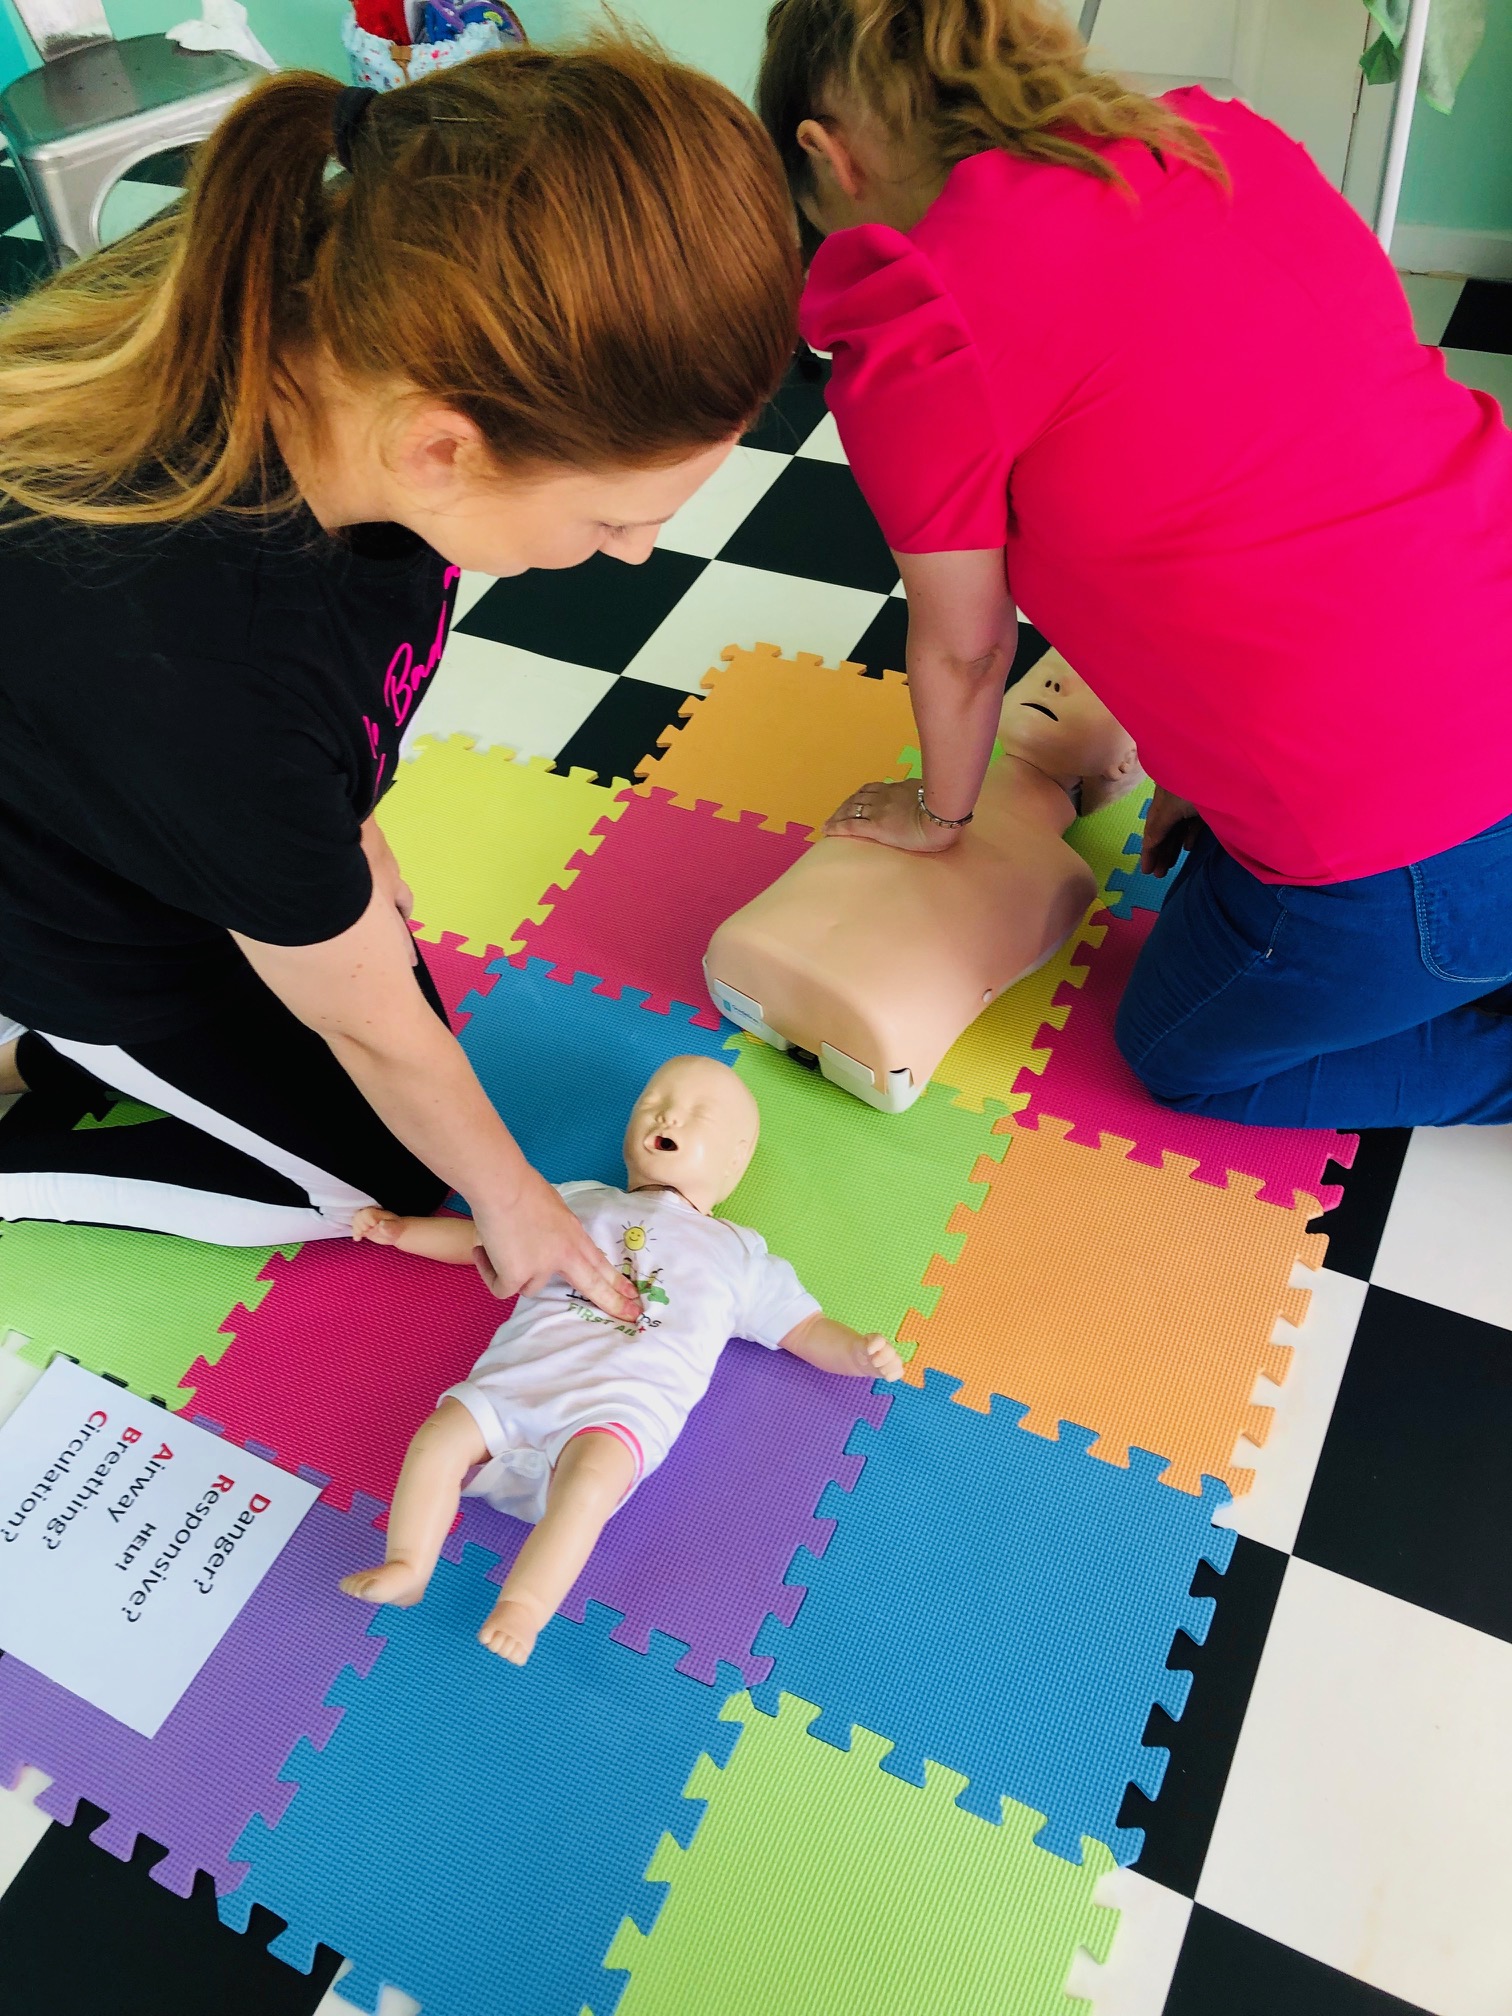 paediatric first aid training